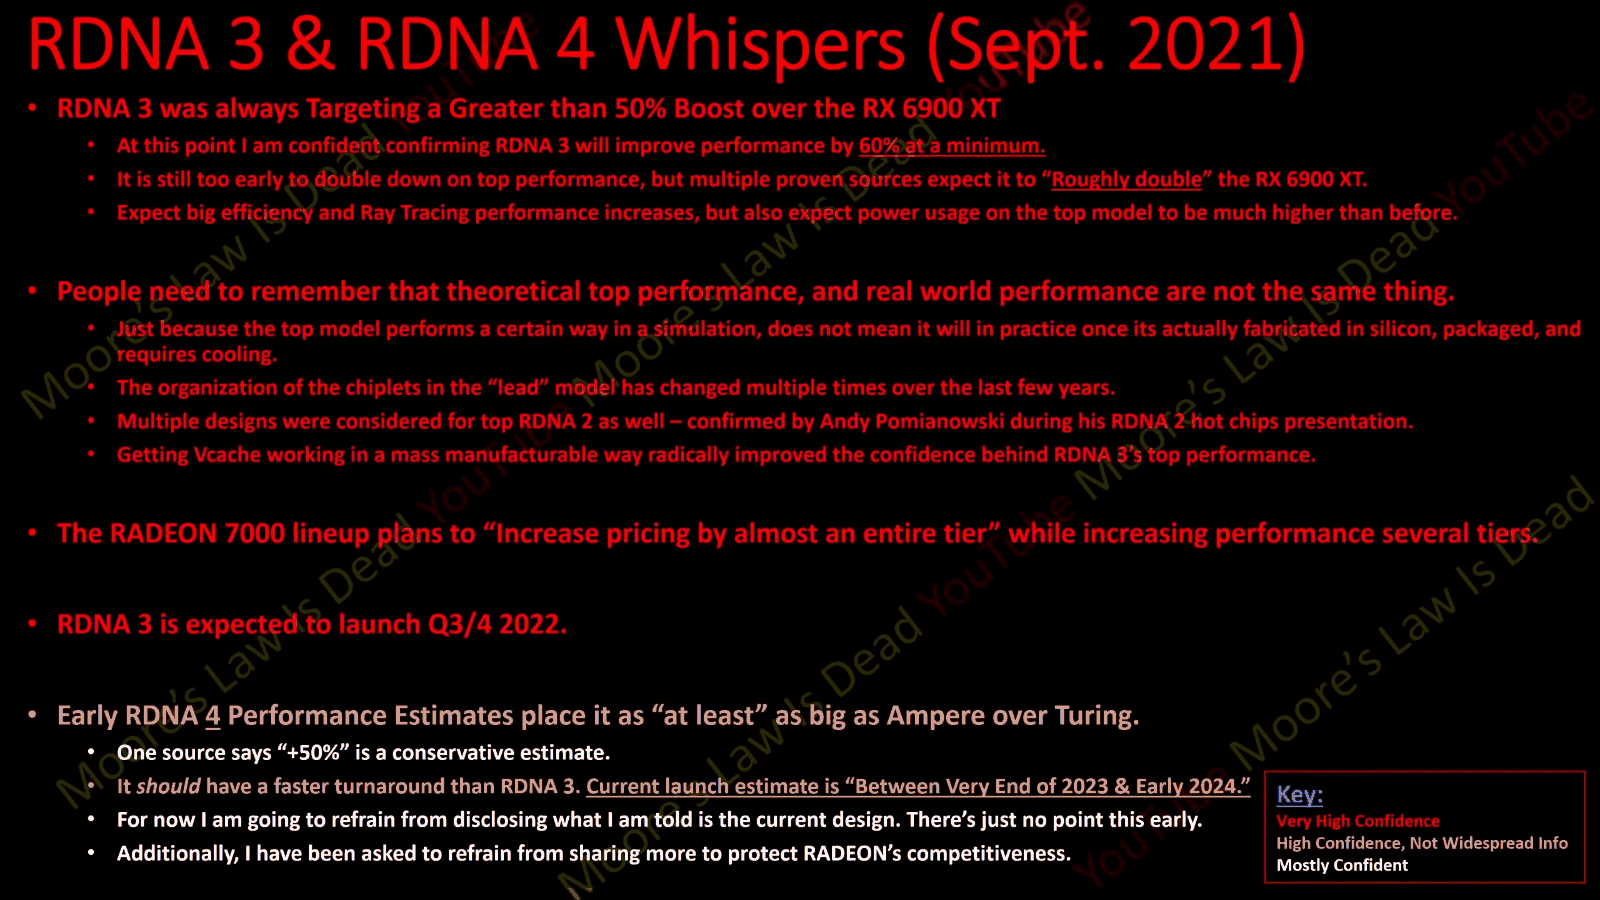 AMD RDNA3 & RDNA4 Gerüchte (by MLID)